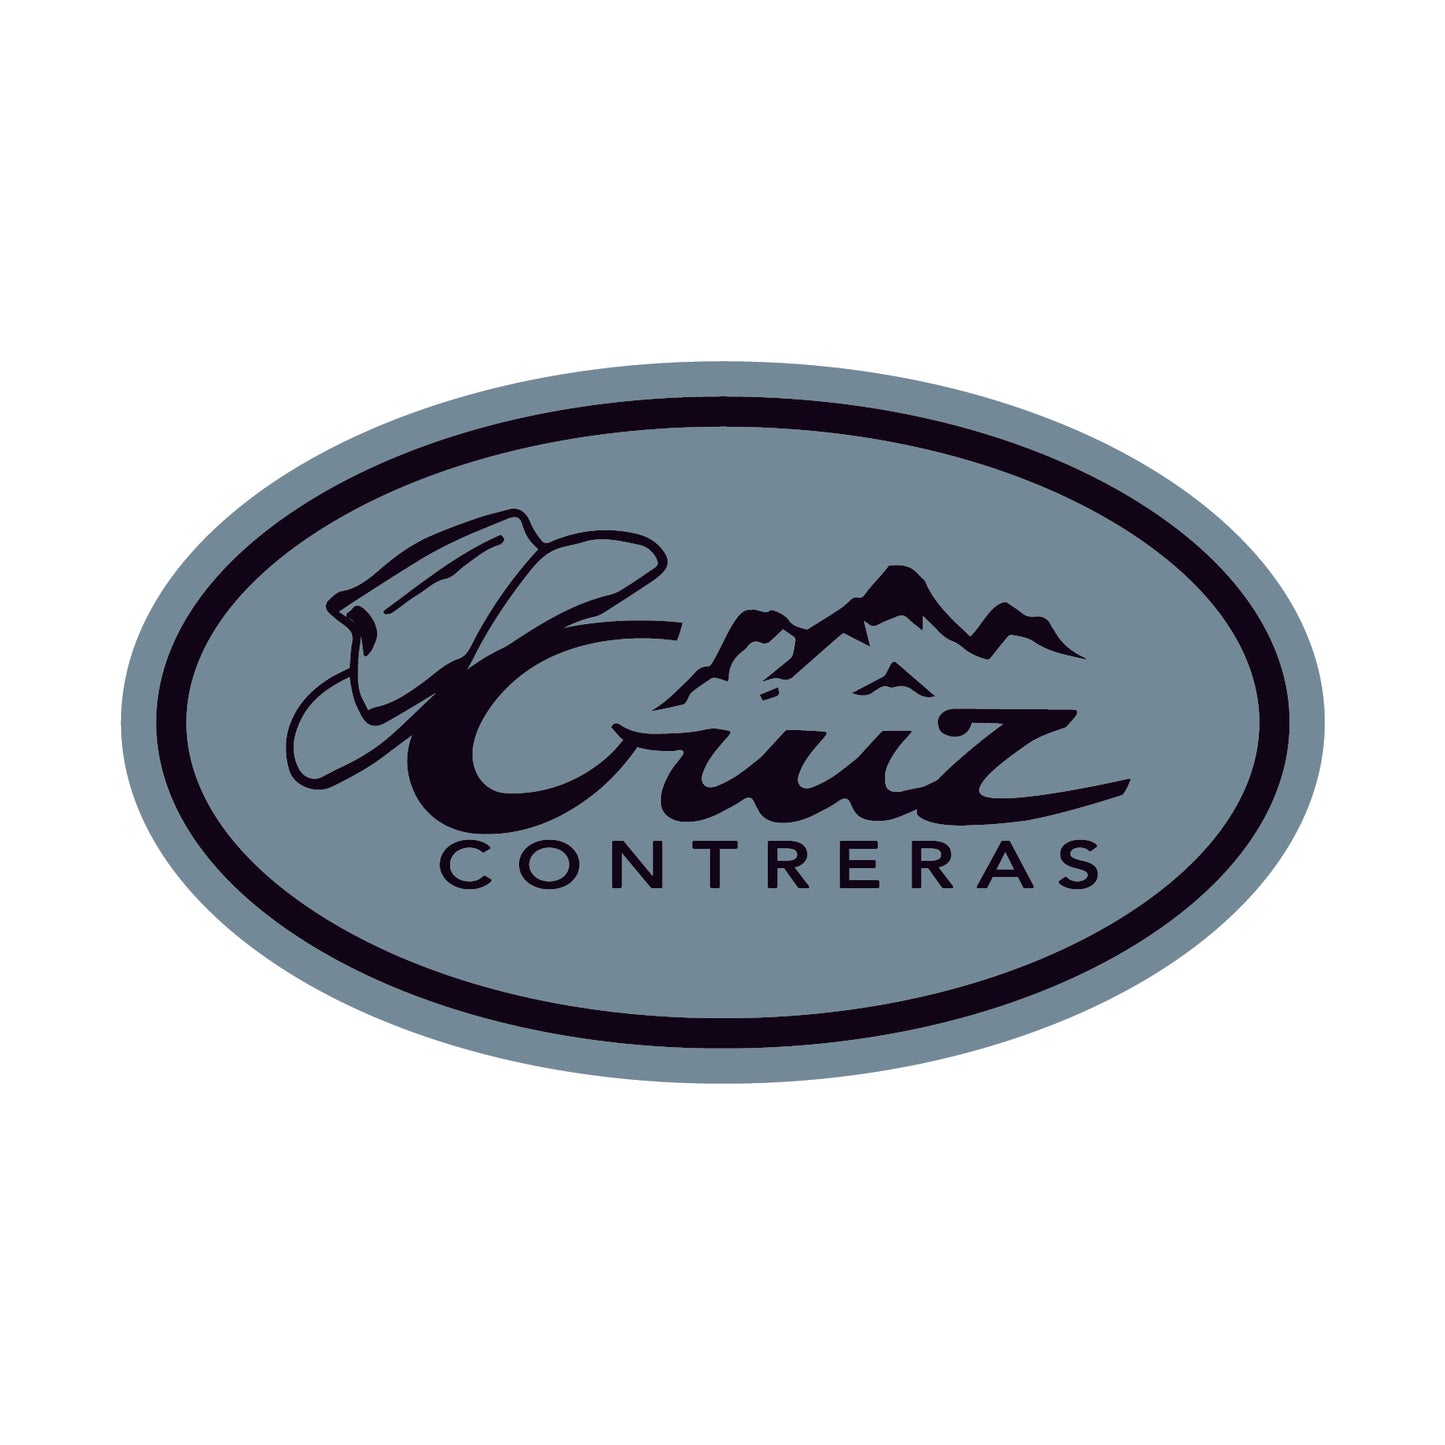 Cruz Contreras Sticker *Free with Purchase*